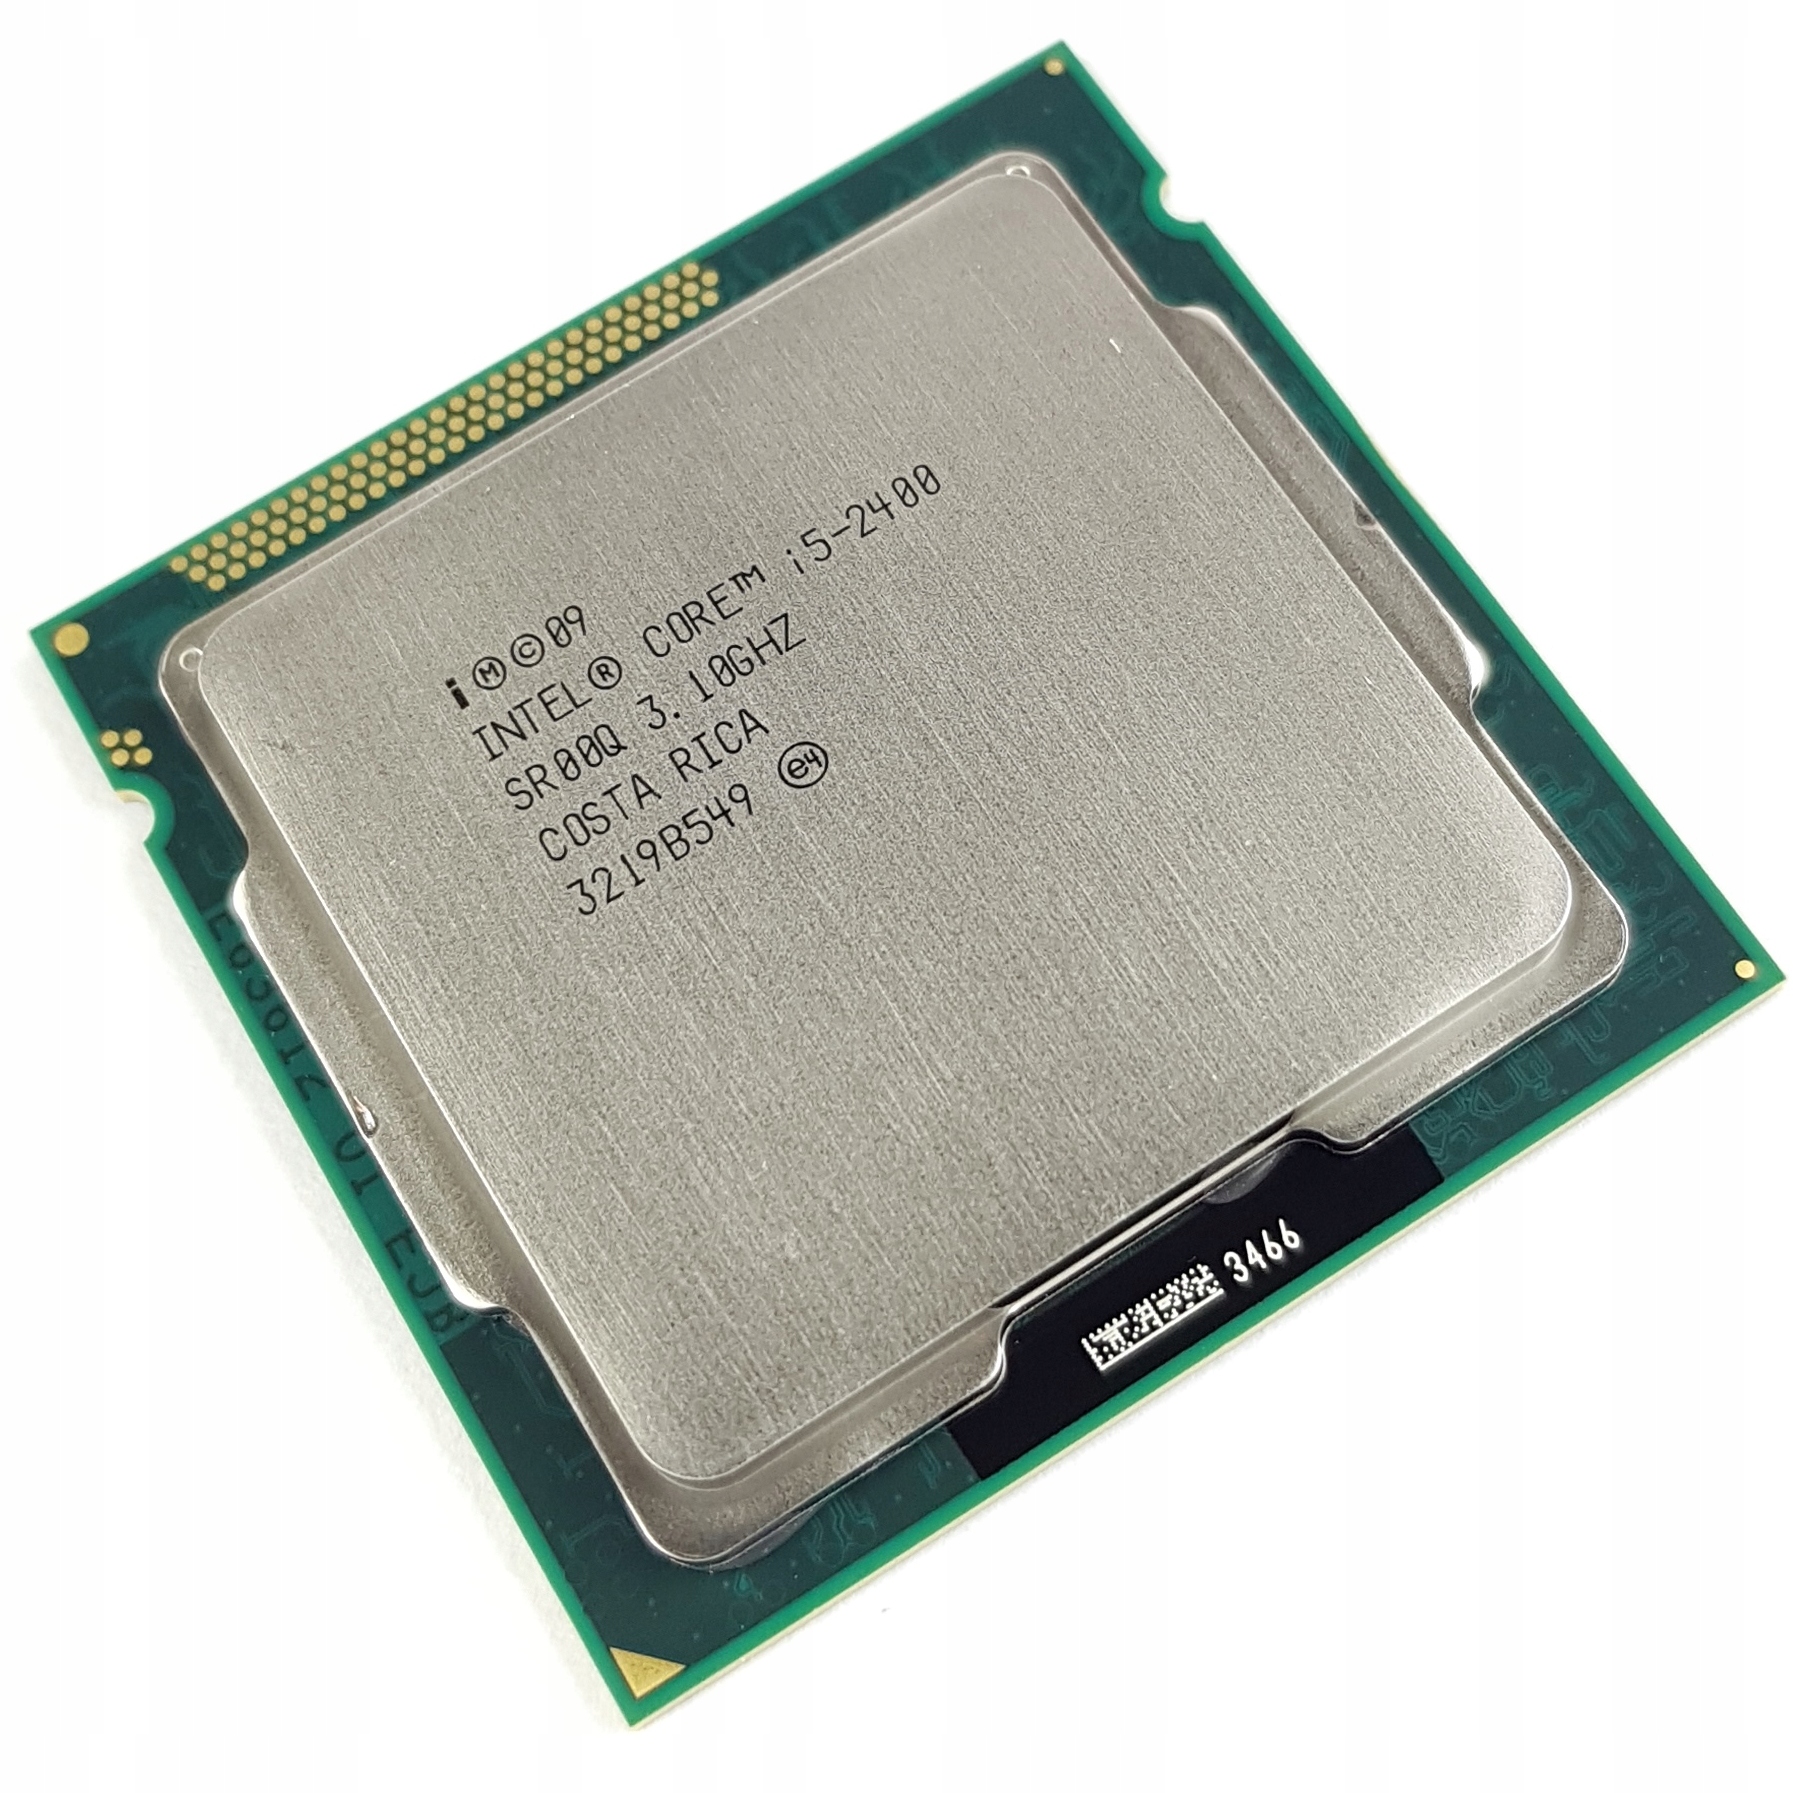 Intel core i5 3.3 ghz. Intel Core i5-2400 Sandy Bridge lga1155, 4 x 3100 МГЦ. I5 2400 CPU @ 3.10GHZ. Intel Core i5-2400 Sandy Bridge (3100mhz, lga1155, l3 6144kb). Процессор Intel Core i5 1155.